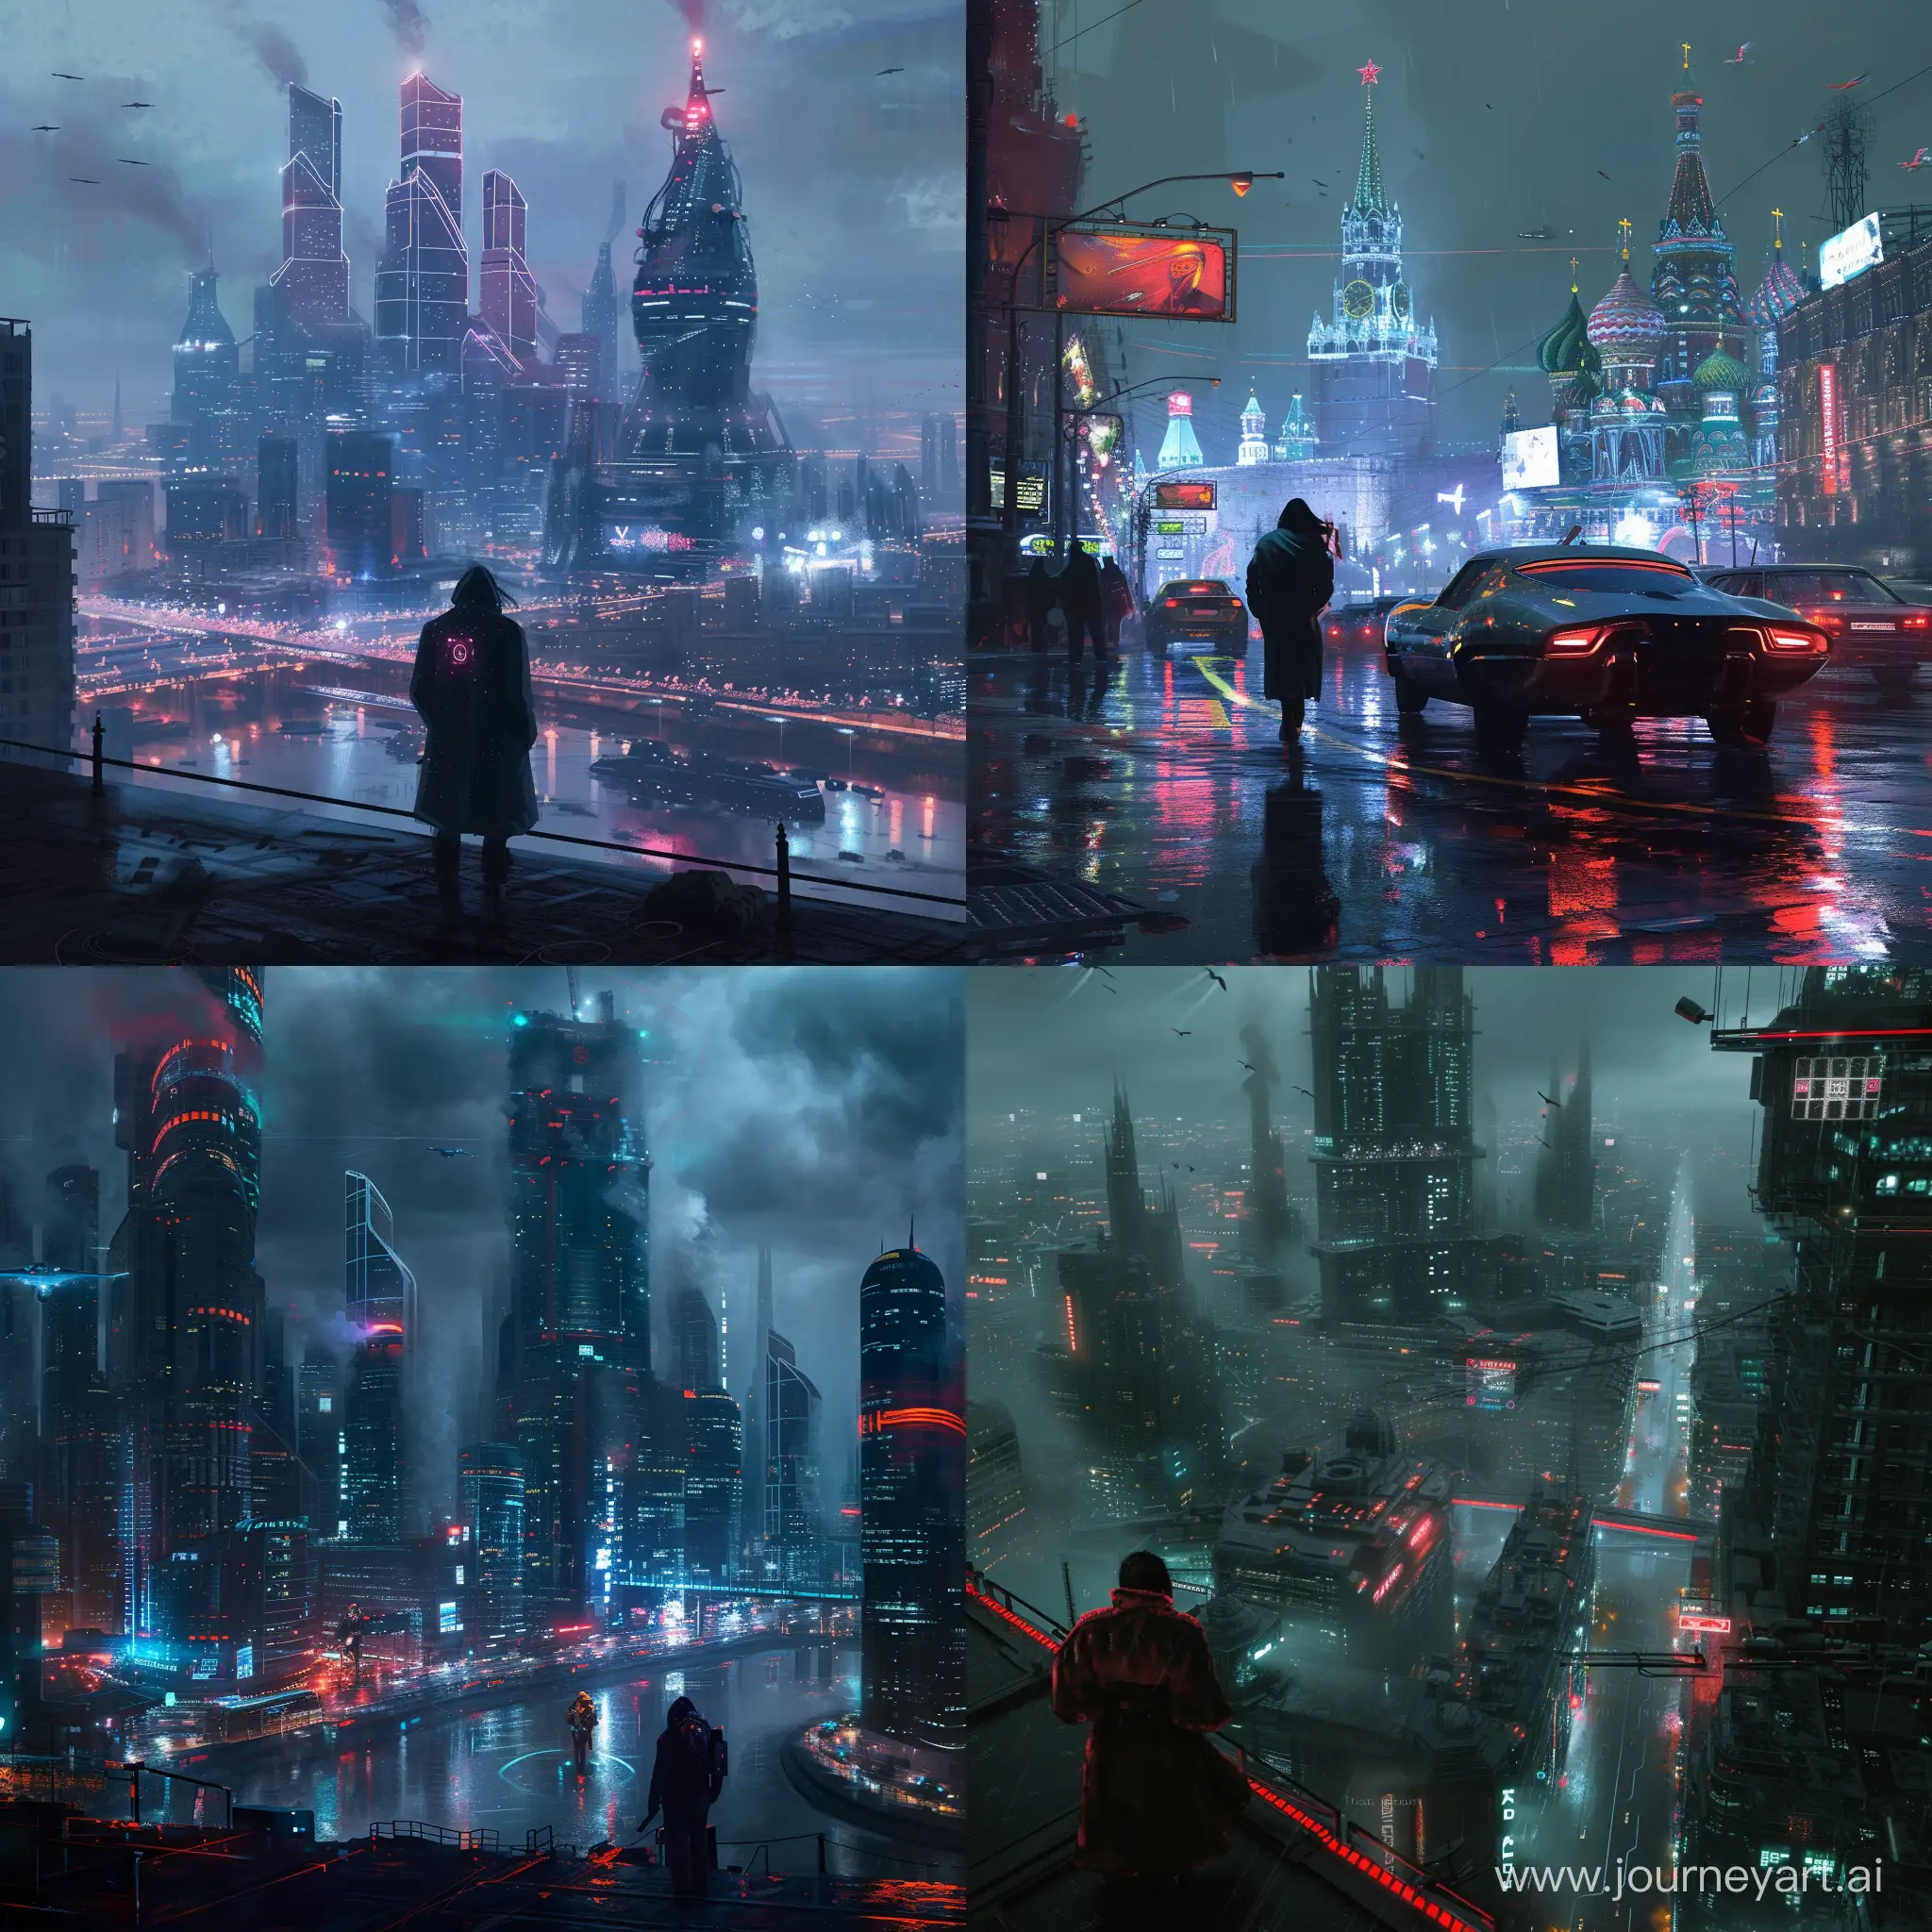 Moscow, postcyberpunk, biopunk, nanopunk, cyber noir, futuristic